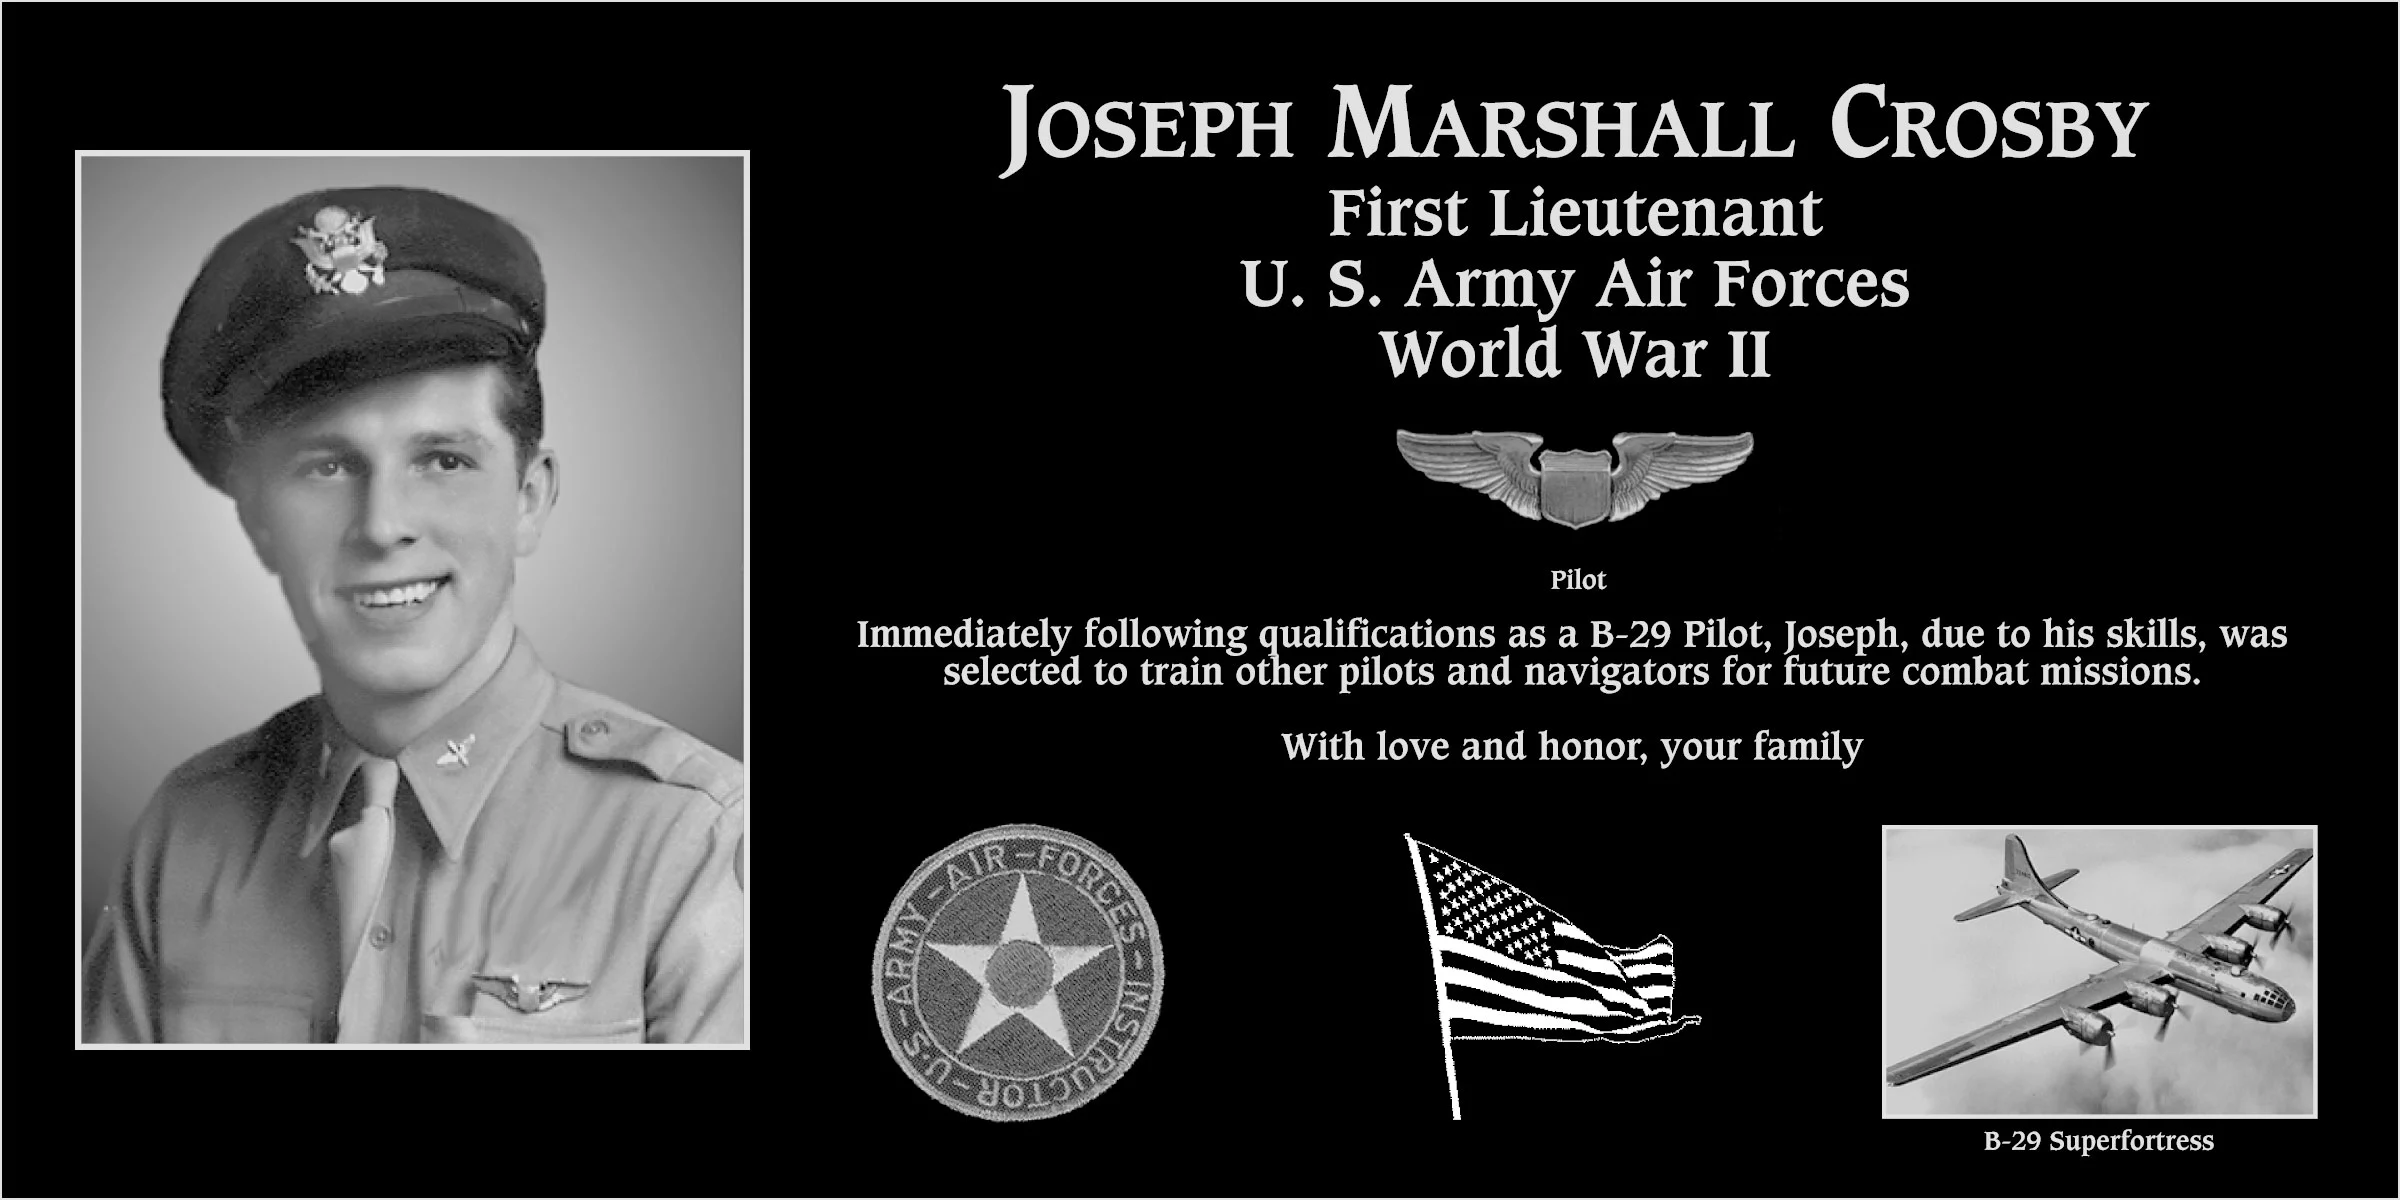 Joseph Marshall Crosby